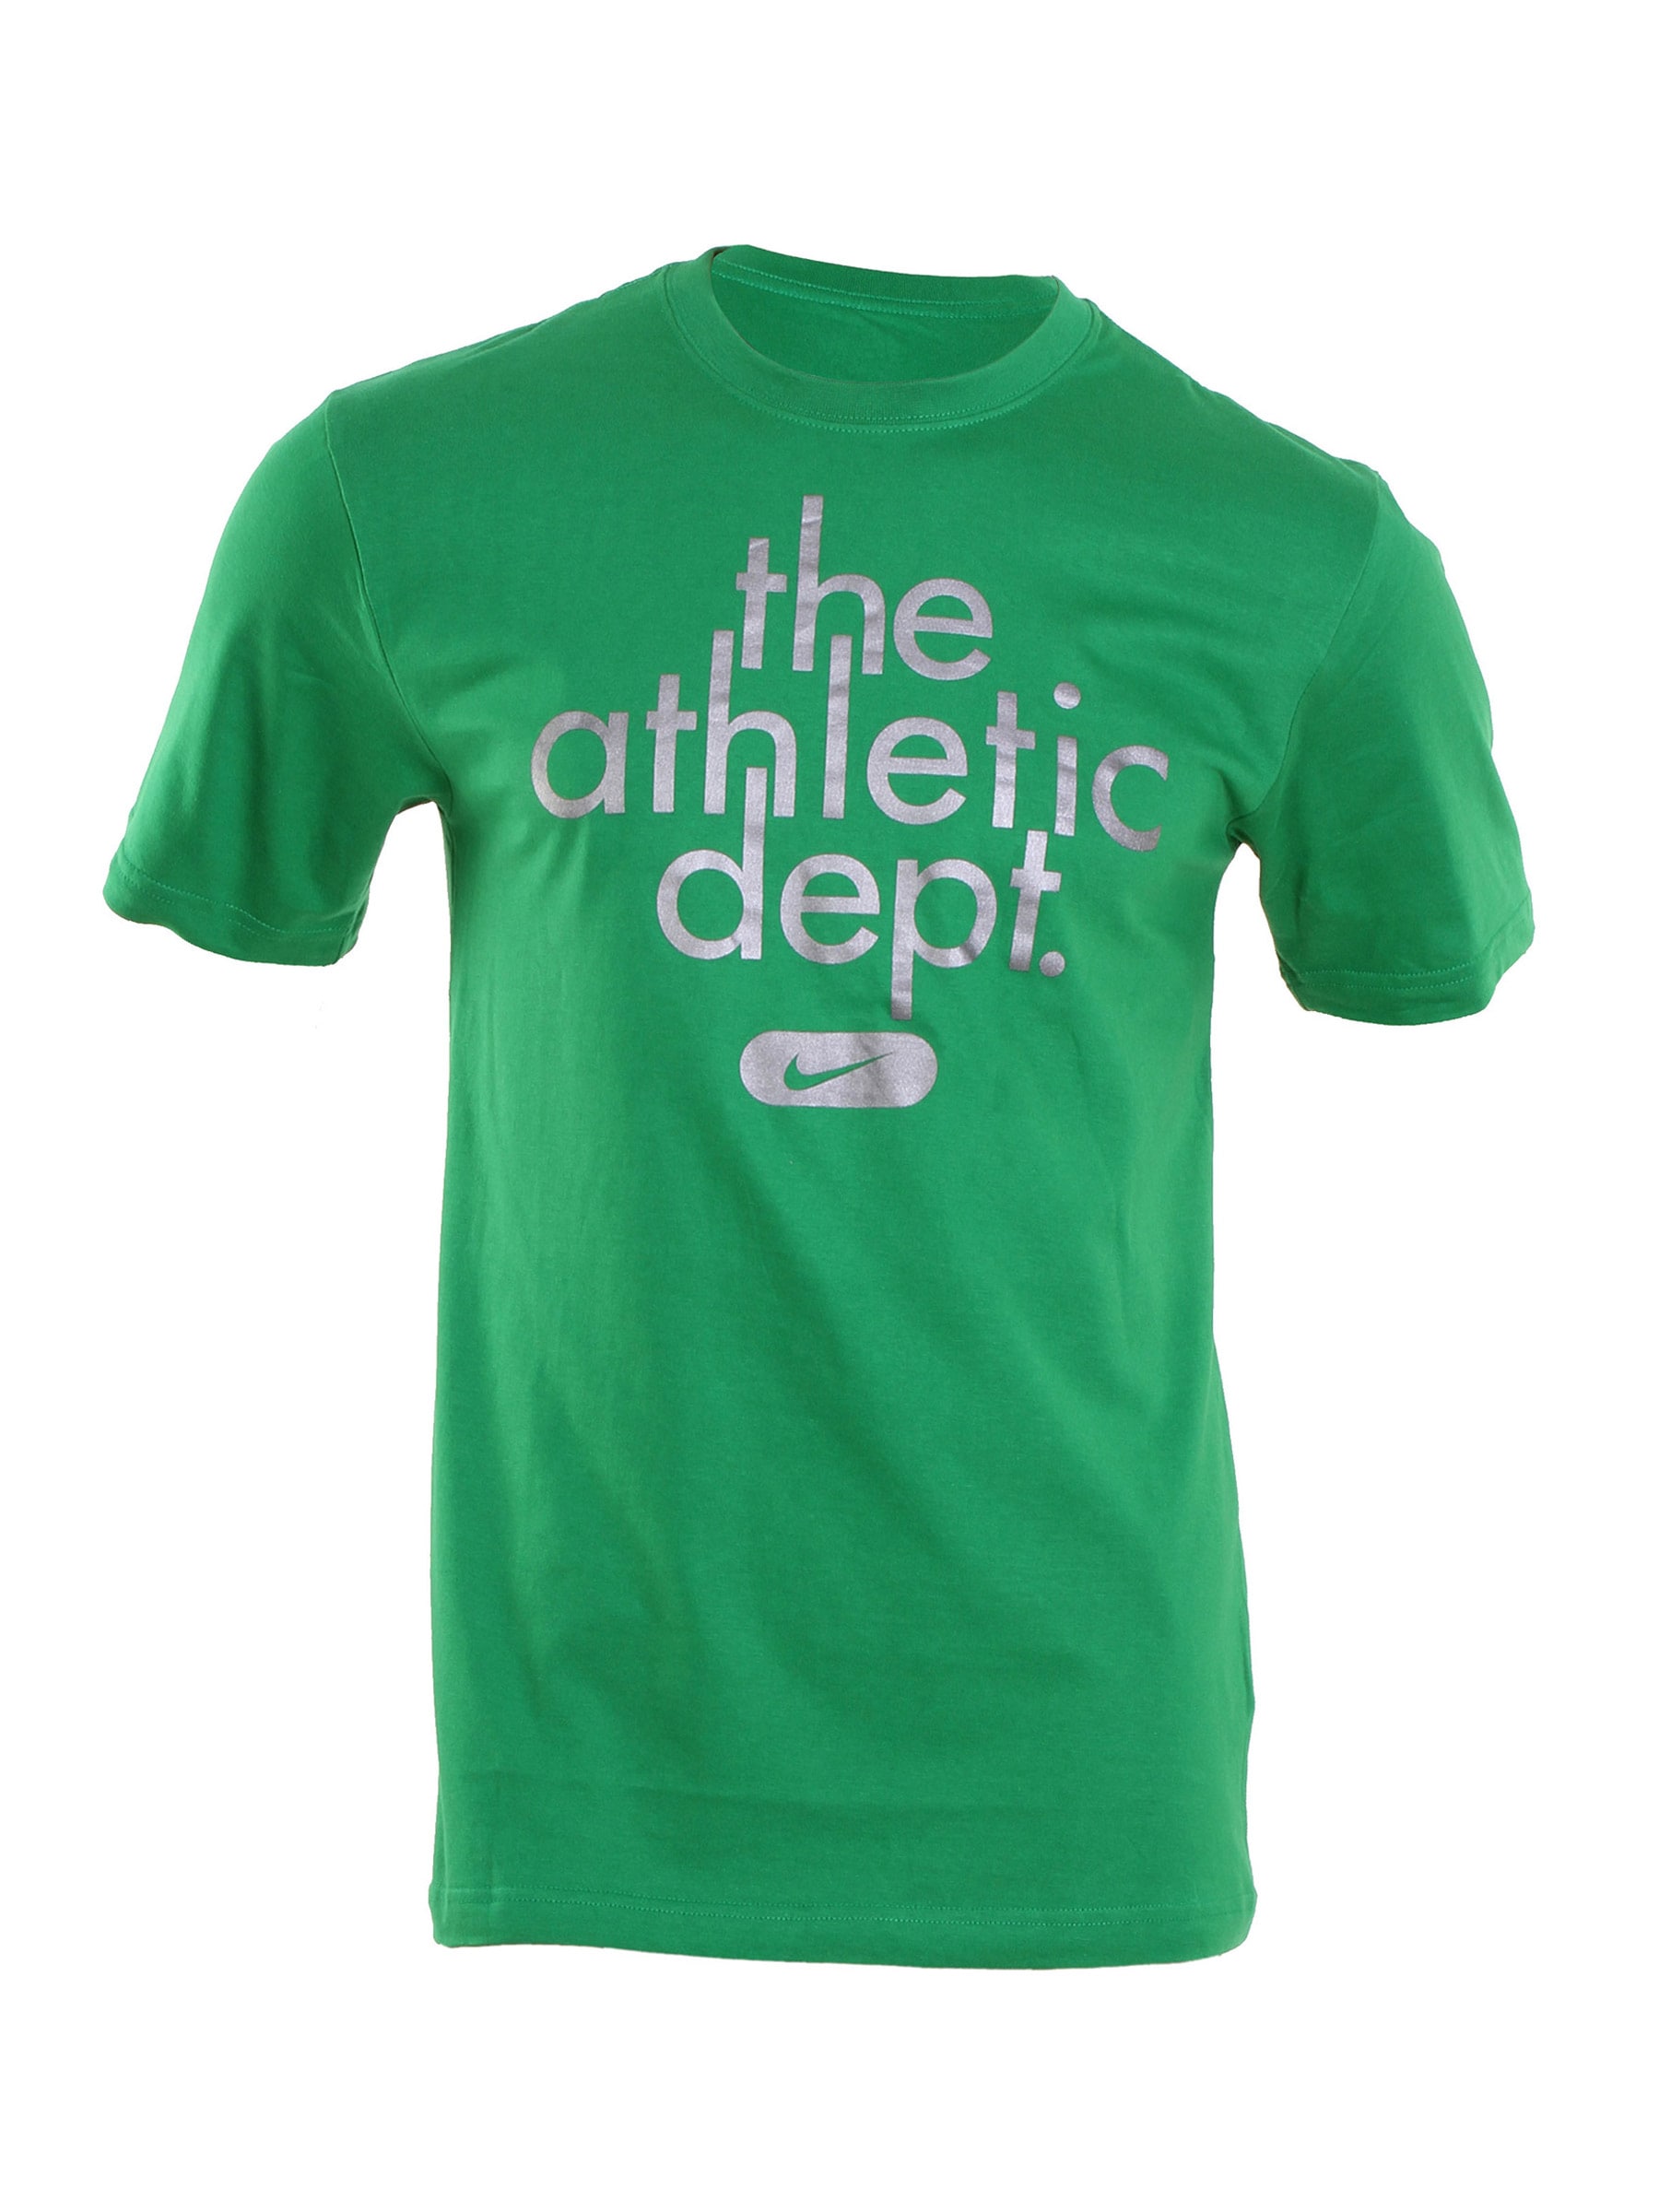 Nike Mens Athletic Green T-shirt